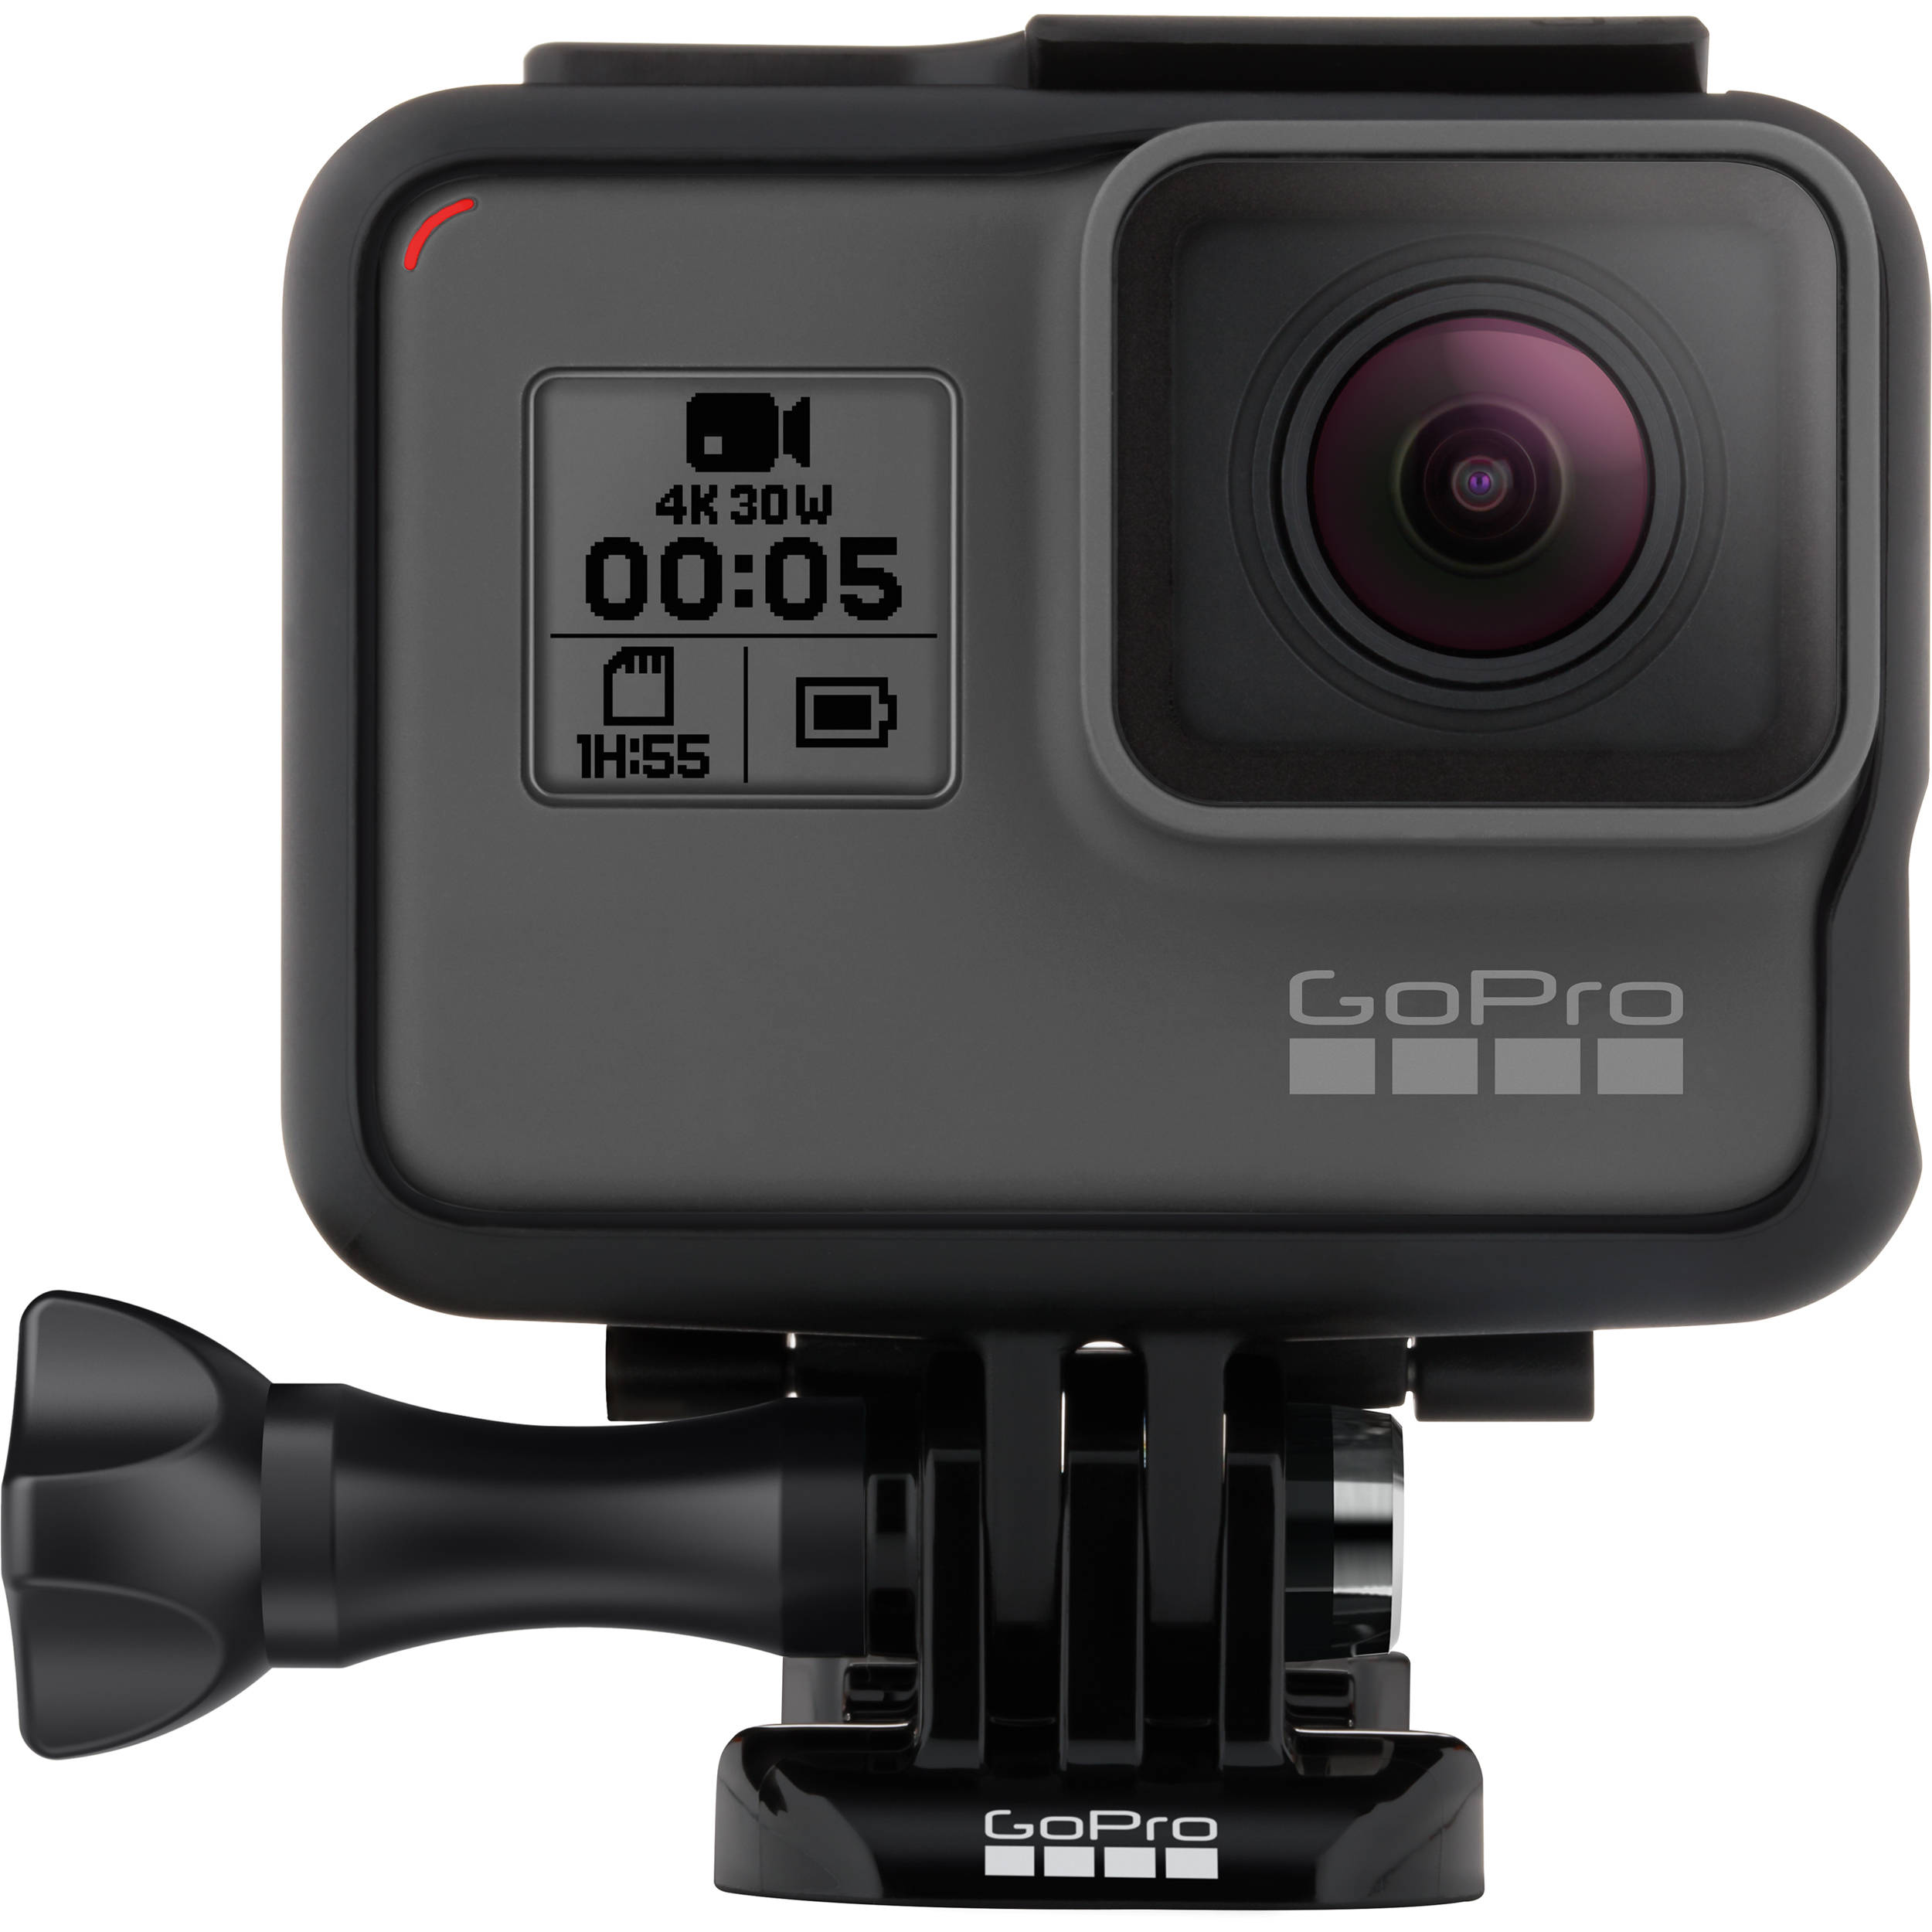 GoPro HERO5 Black, $399.99